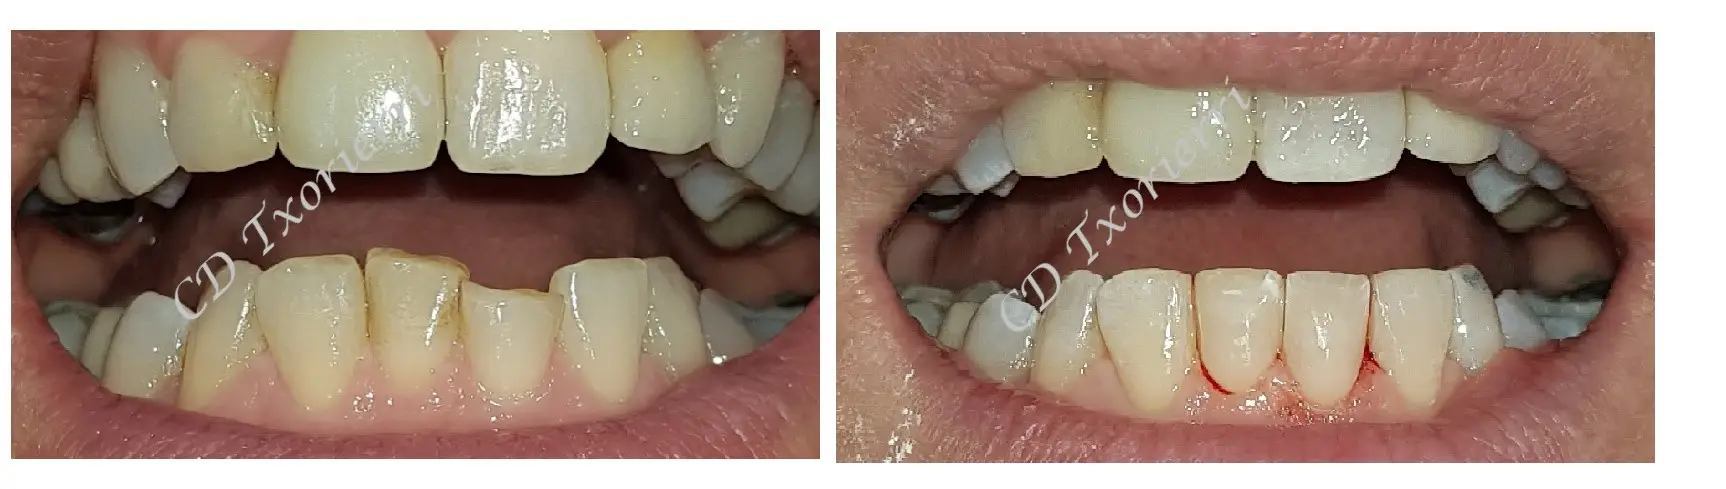 Centro Dental Txorierri CARILLAS ESTETICAS EN 1 SOLO-CASO 2 DIA 2